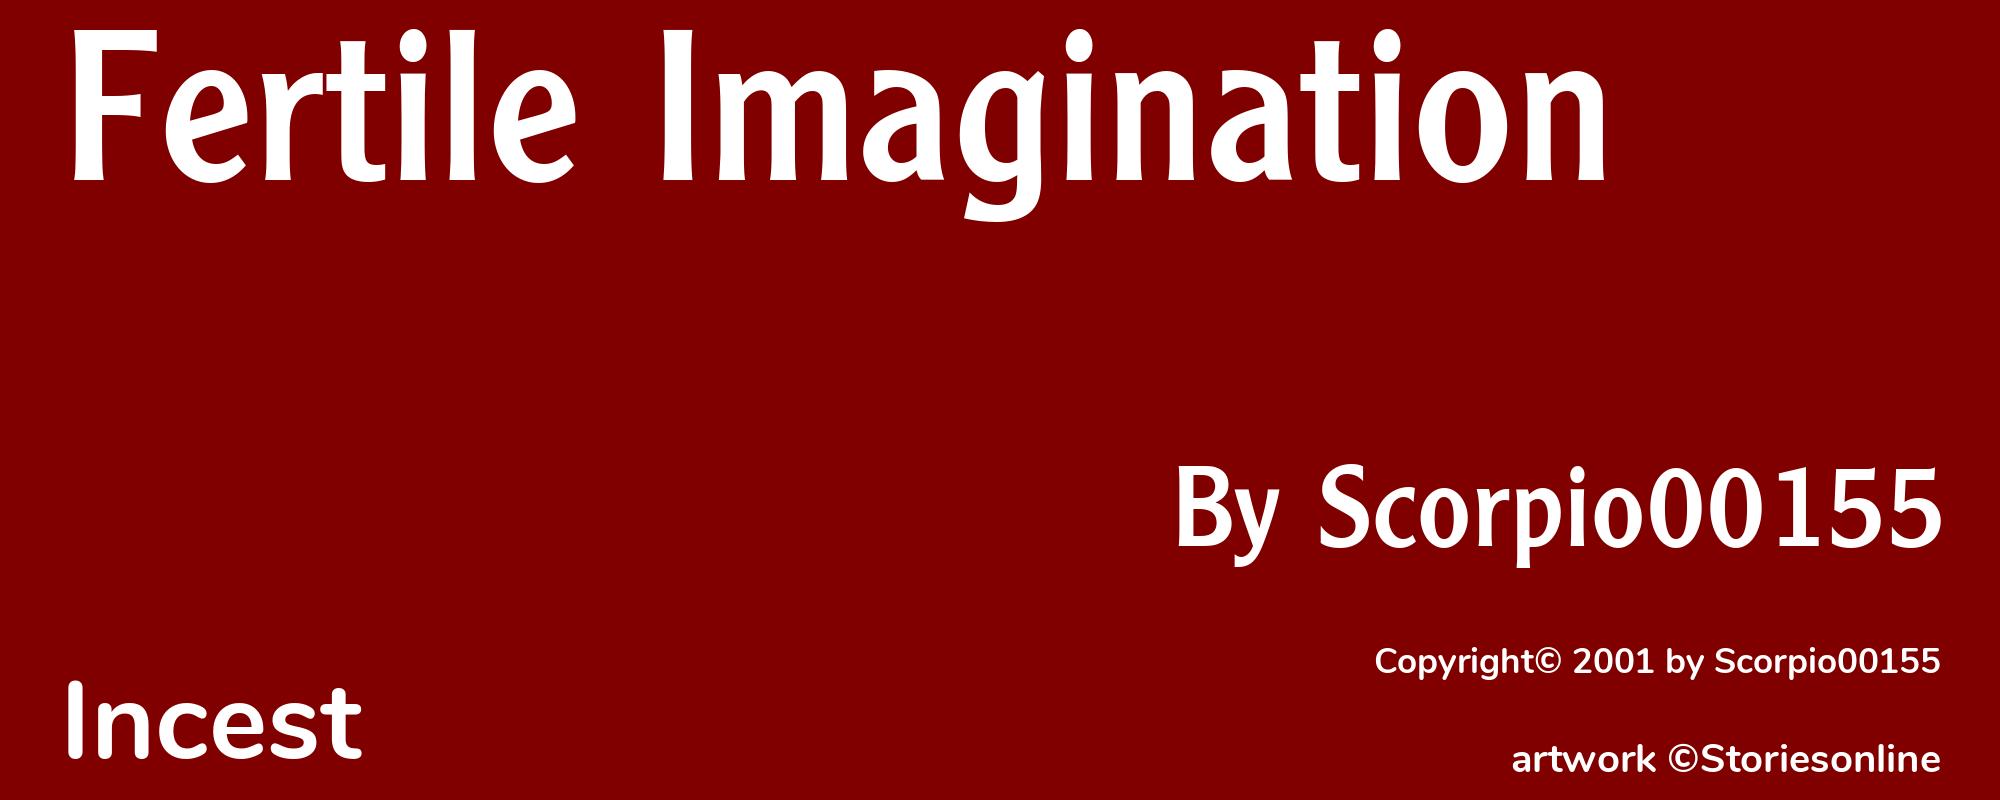 Fertile Imagination - Cover